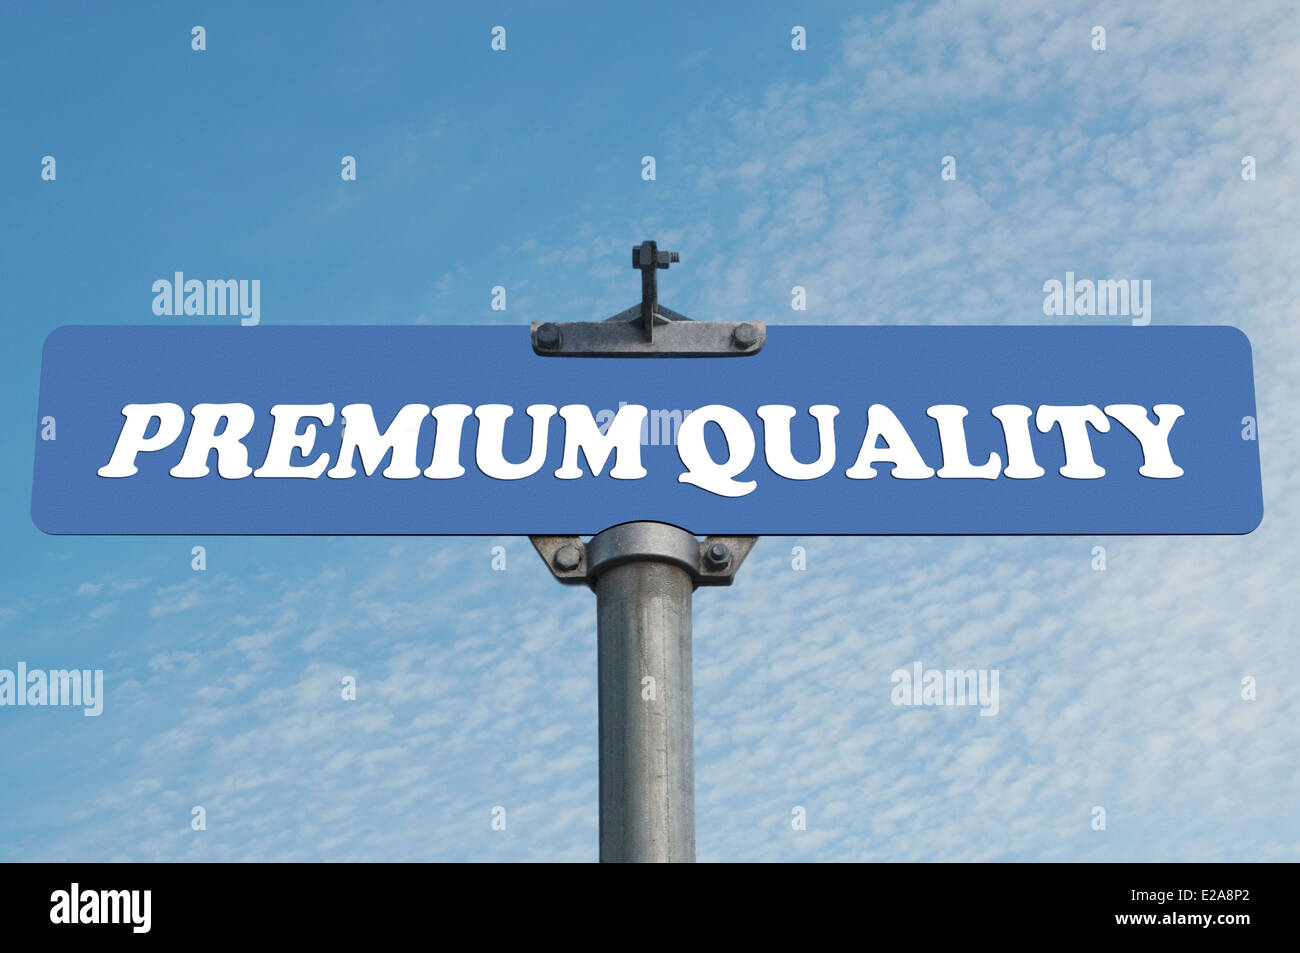 Premium quality road sign Stock Photo